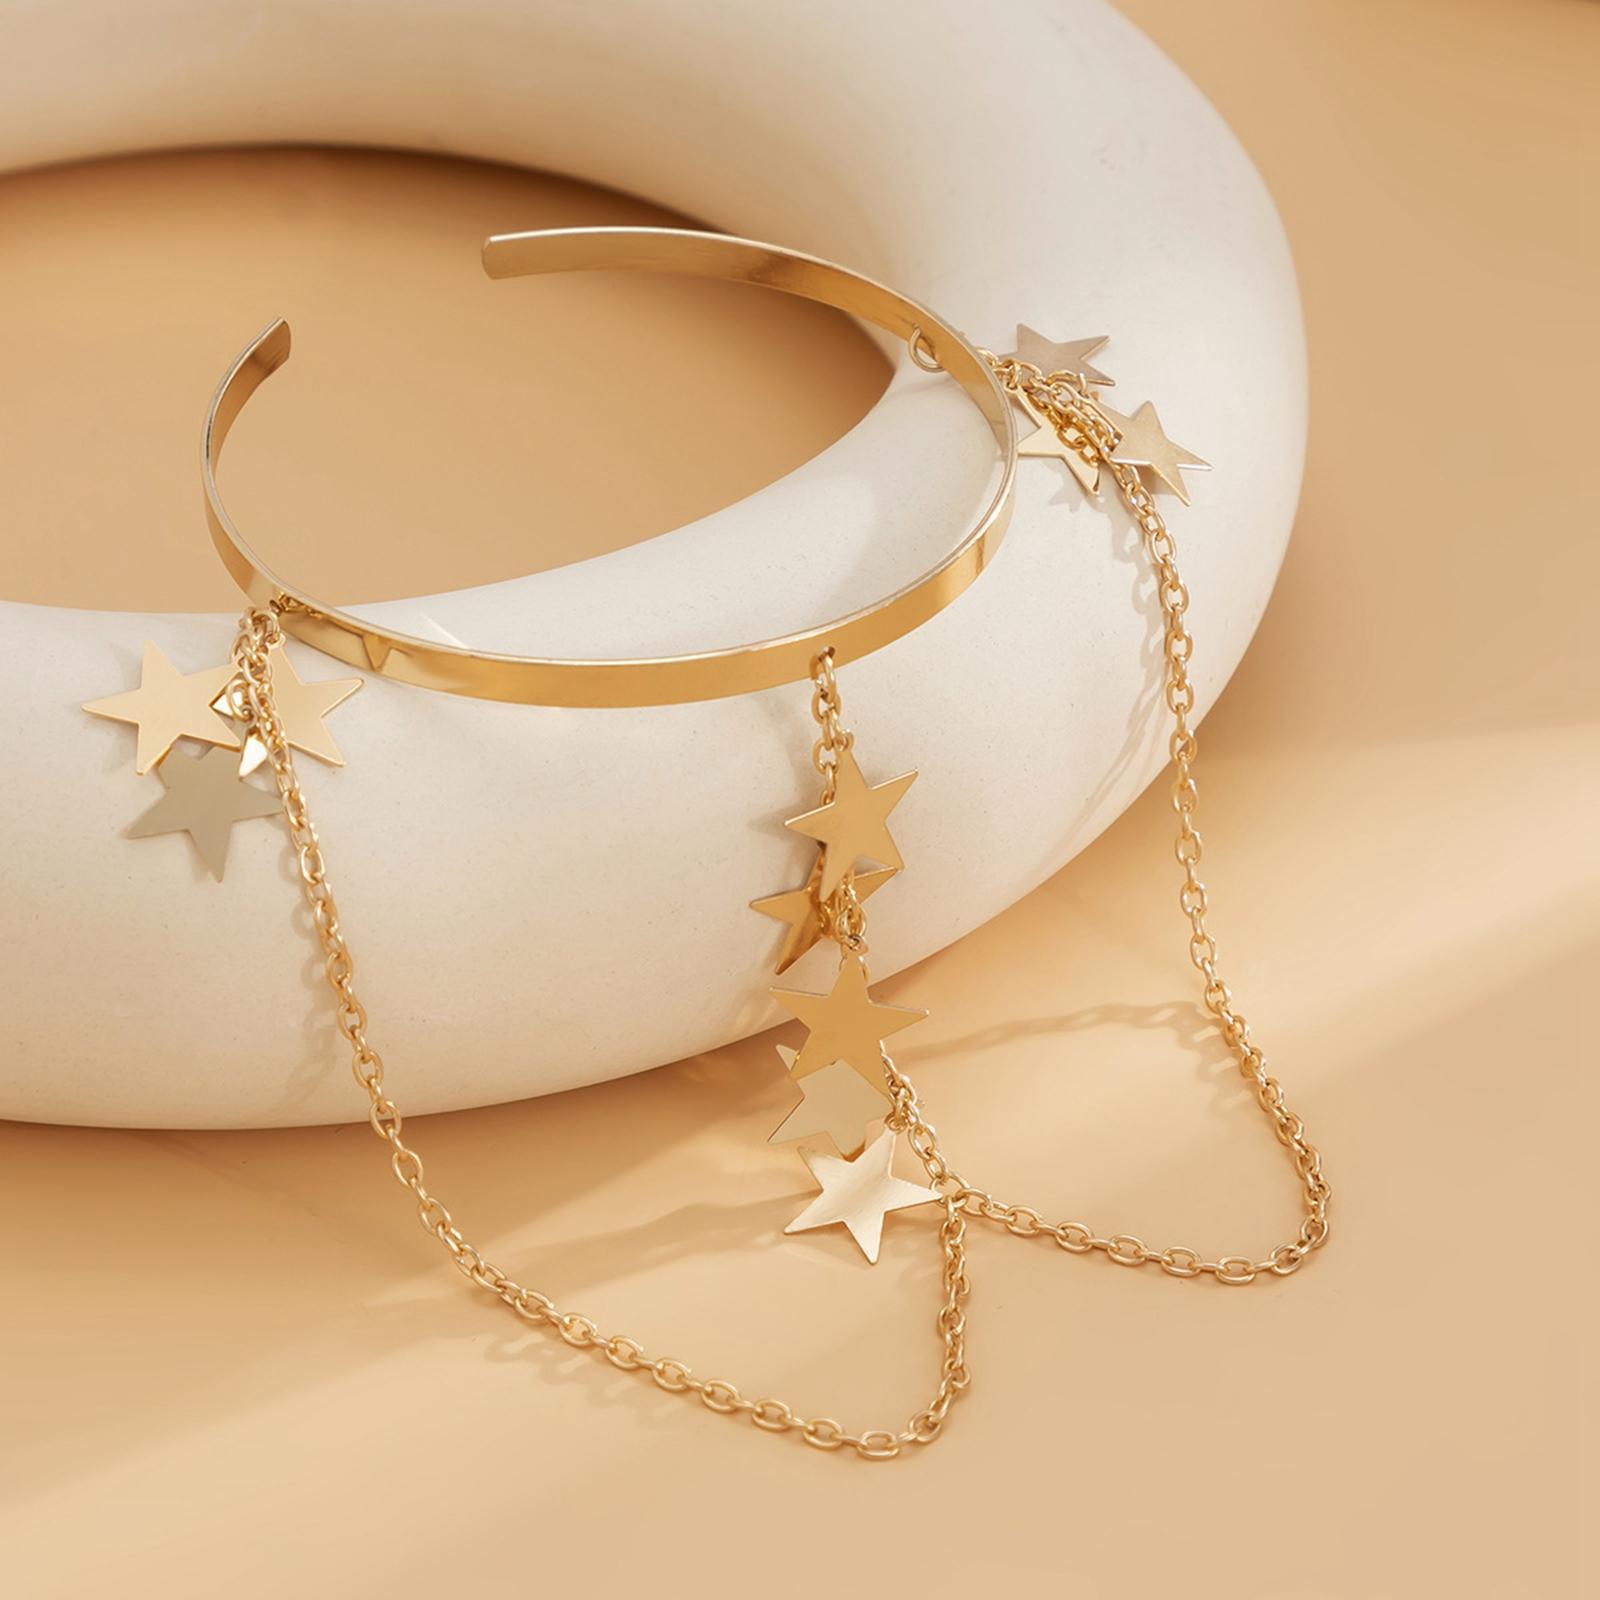 Arm Bracelet Gift Open Jewelry Fashion for Birthday Beach Party